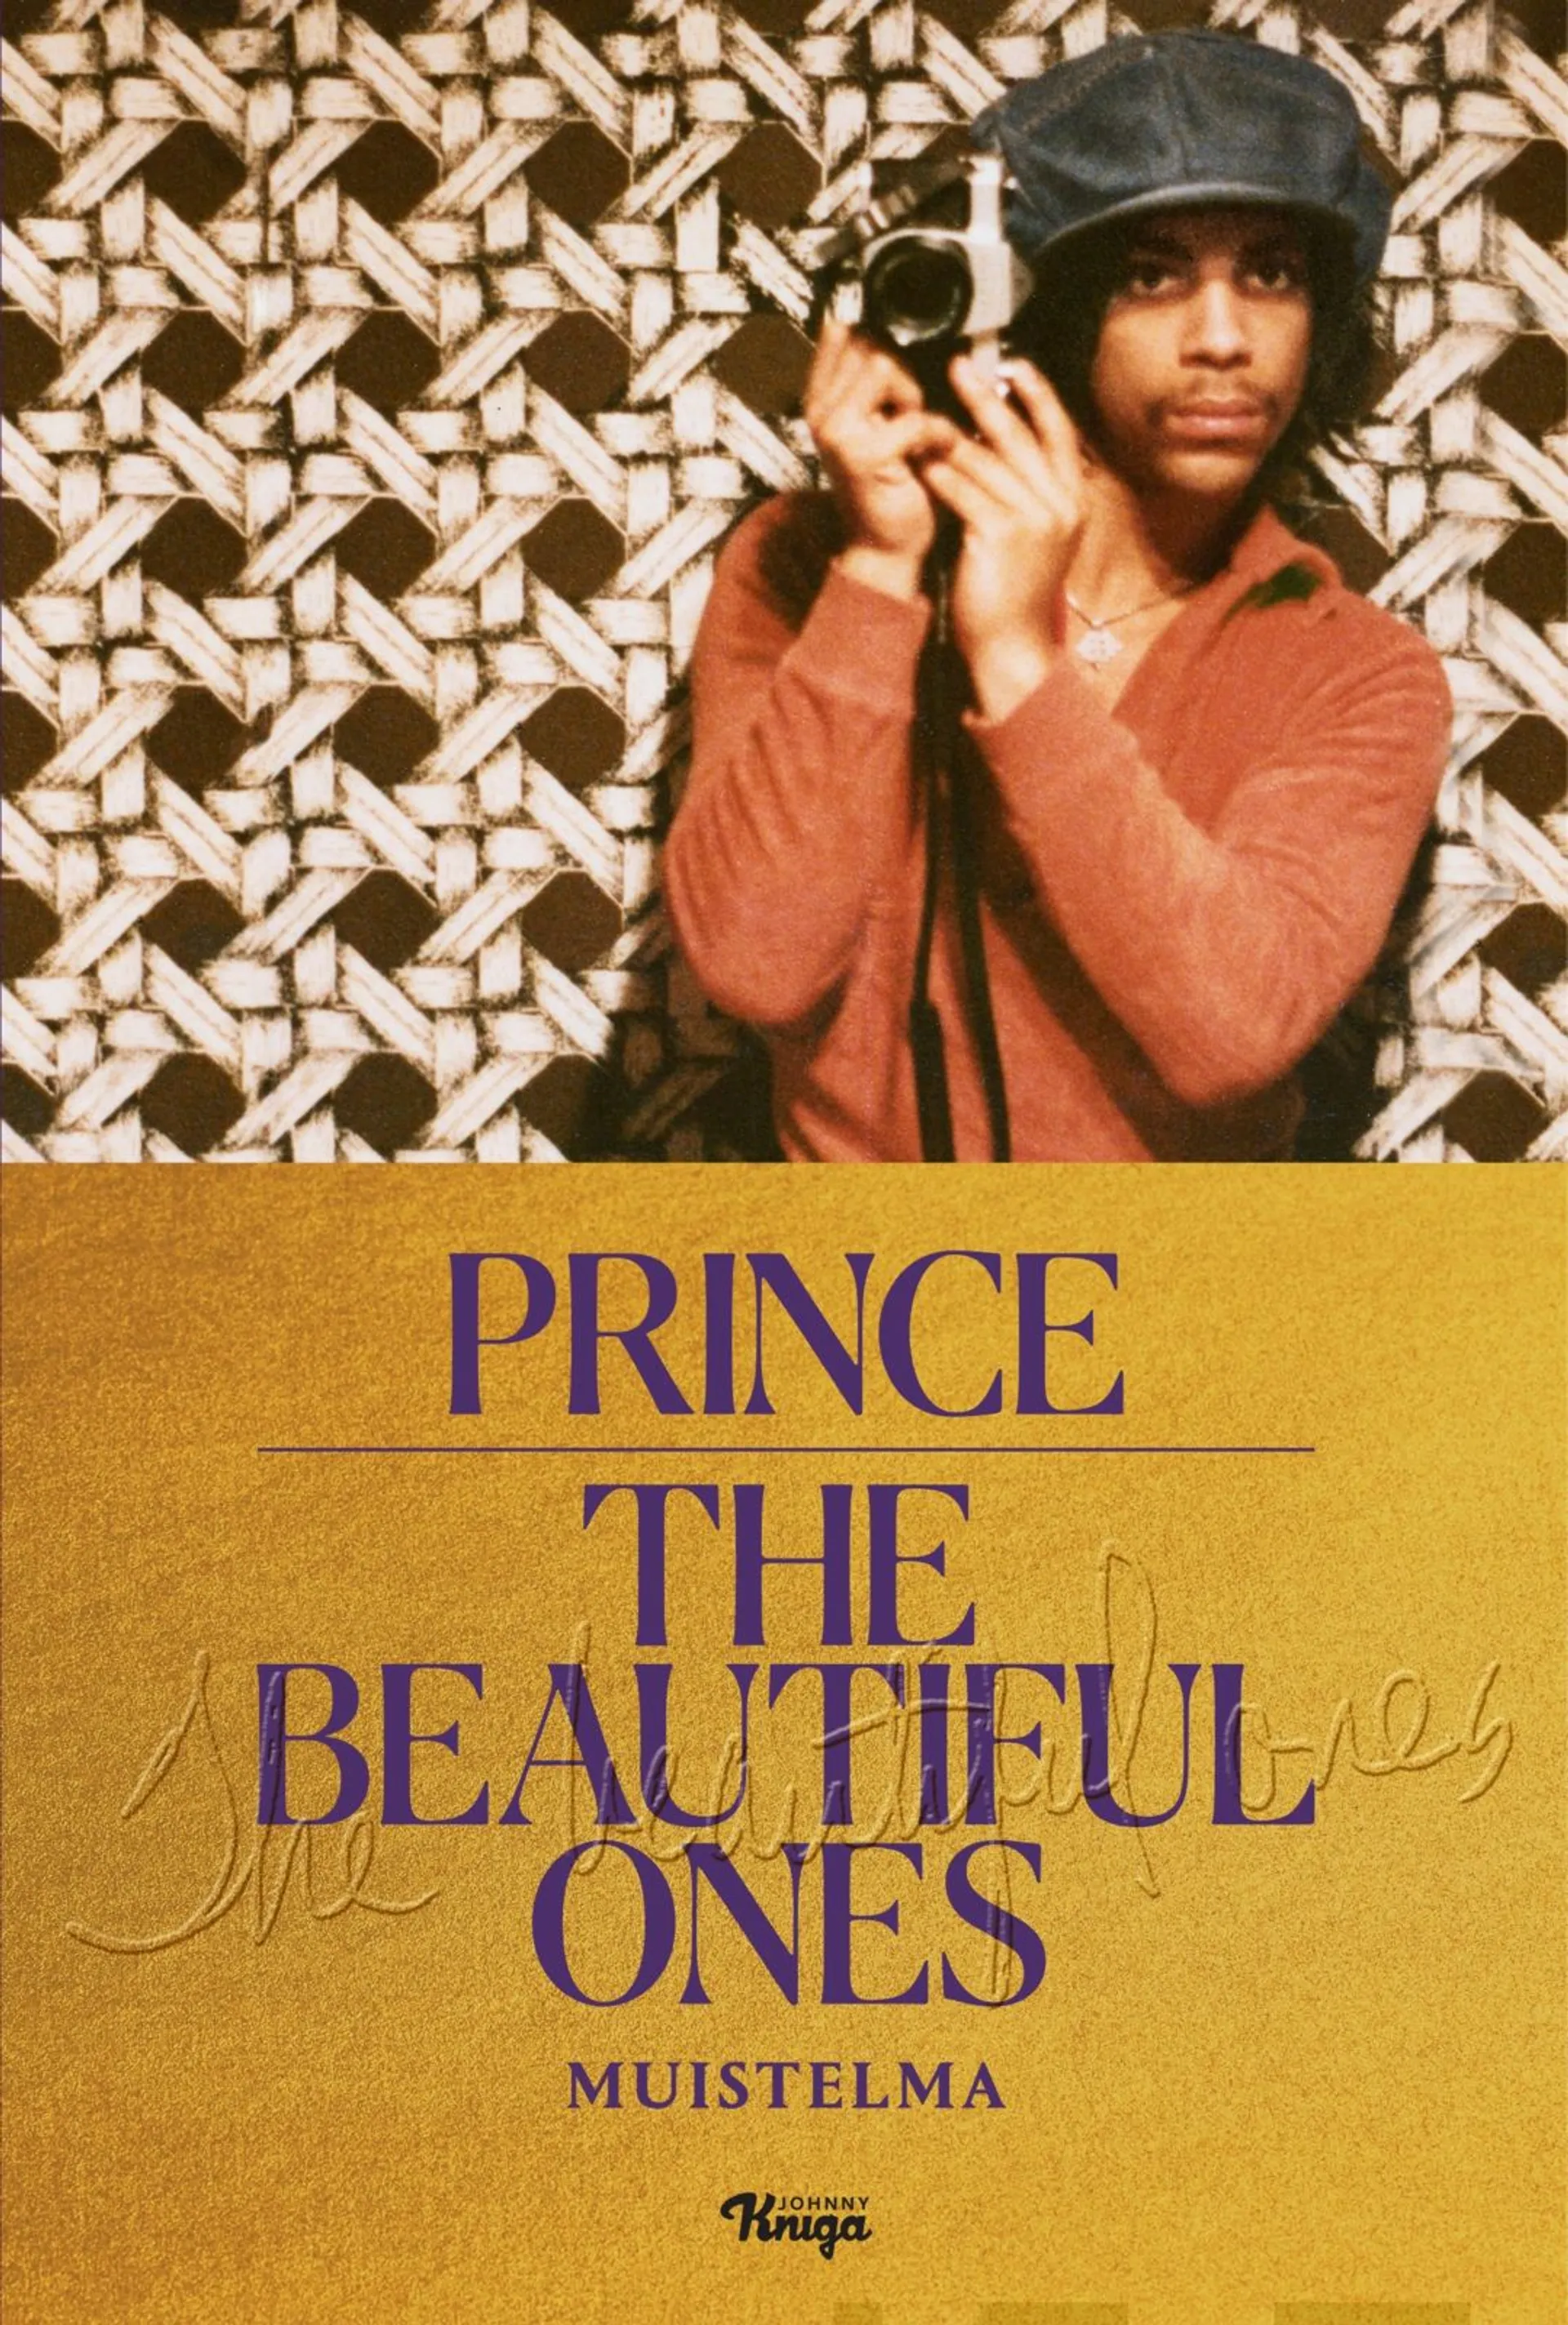 Prince, The Beautiful Ones - Muistelma